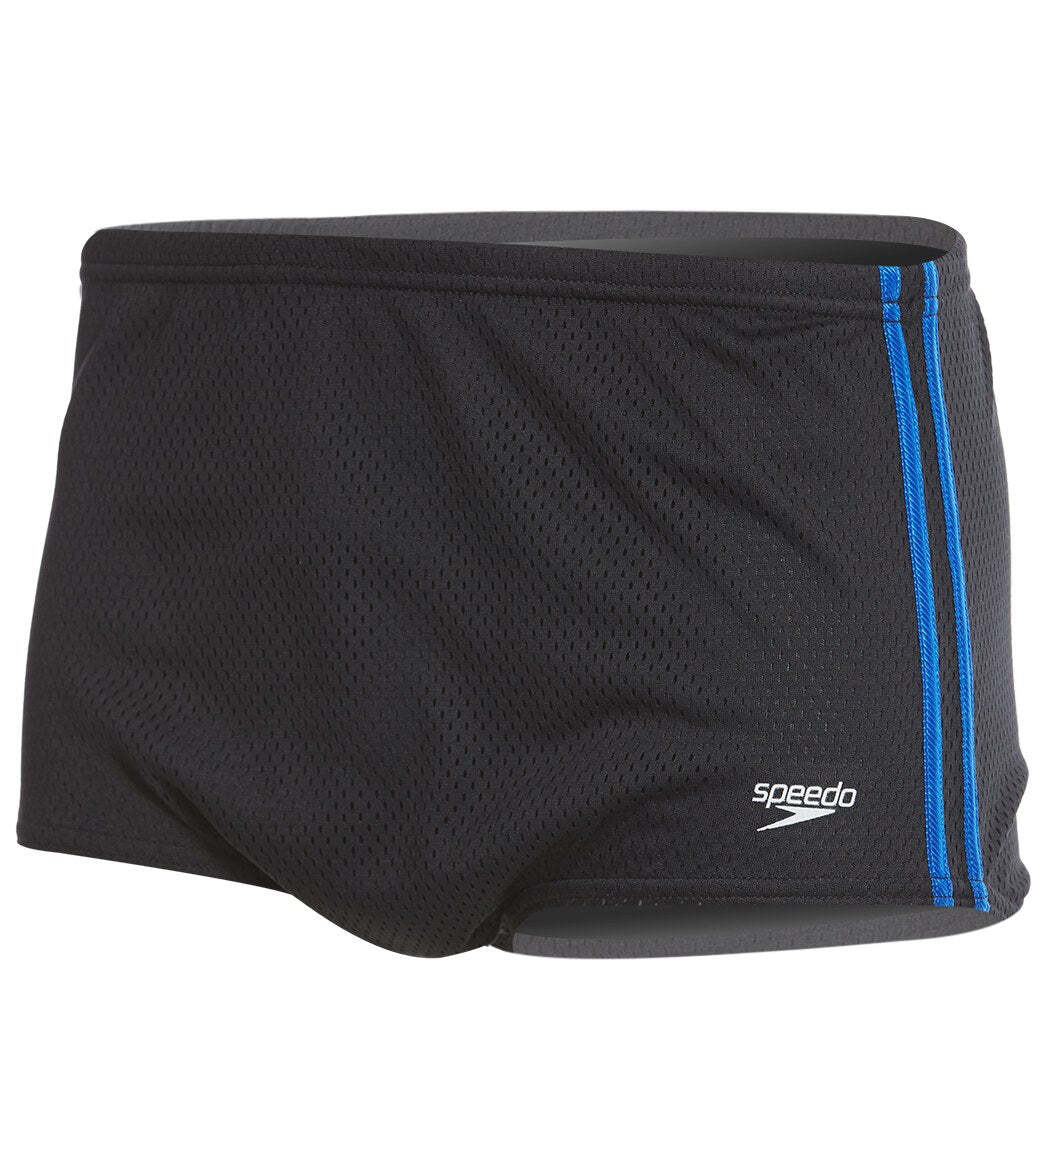 Speedo Black/Blue Size 30 Poly Mesh Square Leg Swimsuit